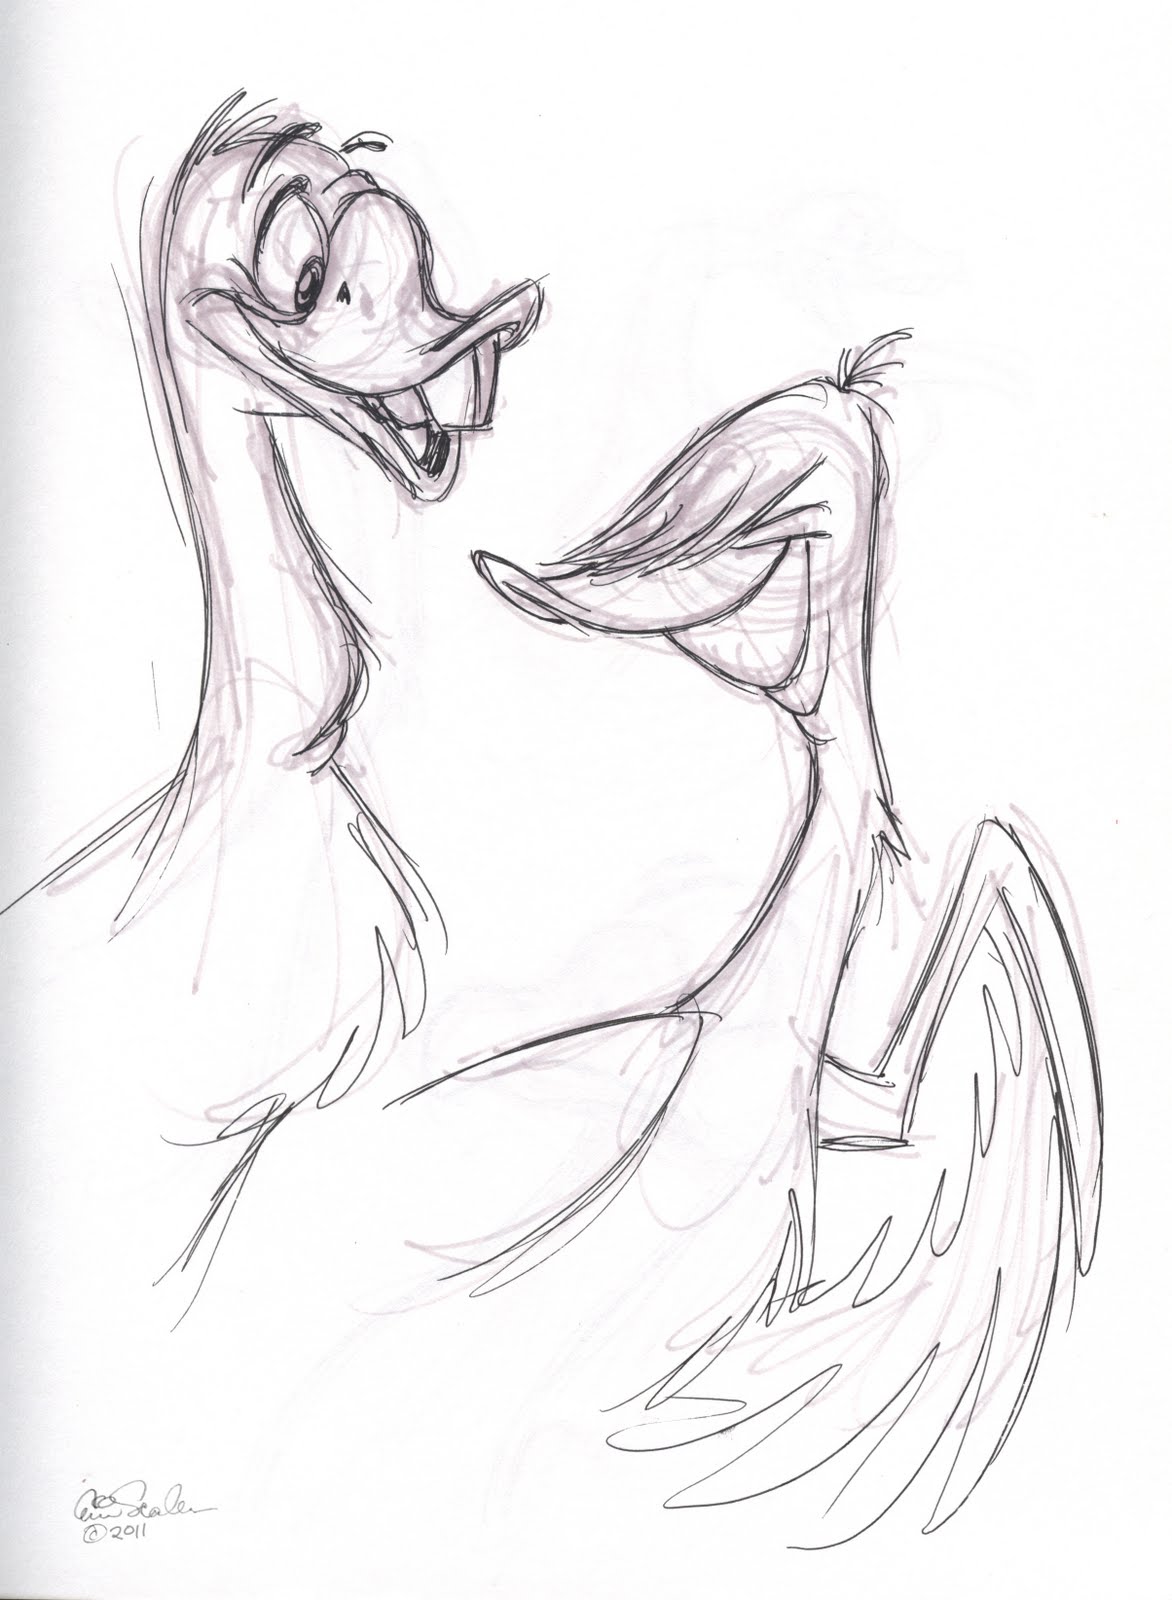 Goofy+Geese.jpg (1172×1600) | Cartoon character design, Animal ...